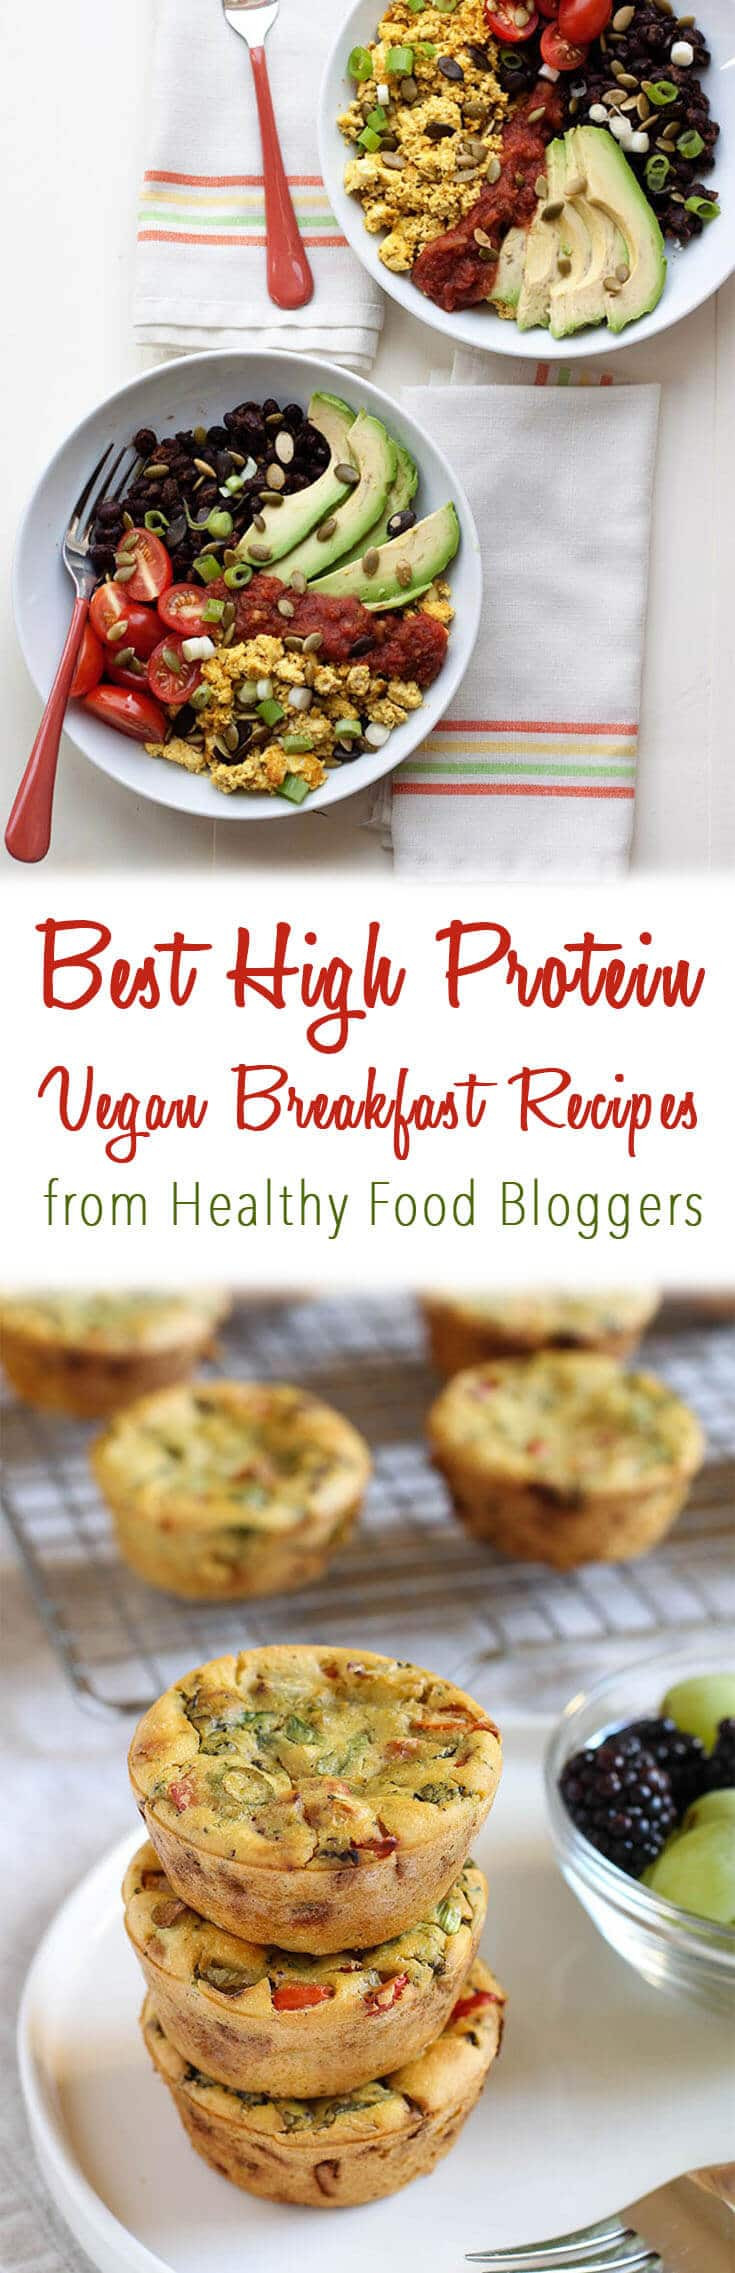 Vegan Breakfast Ideas
 Best High Protein Vegan Breakfast Recipes from Healthy